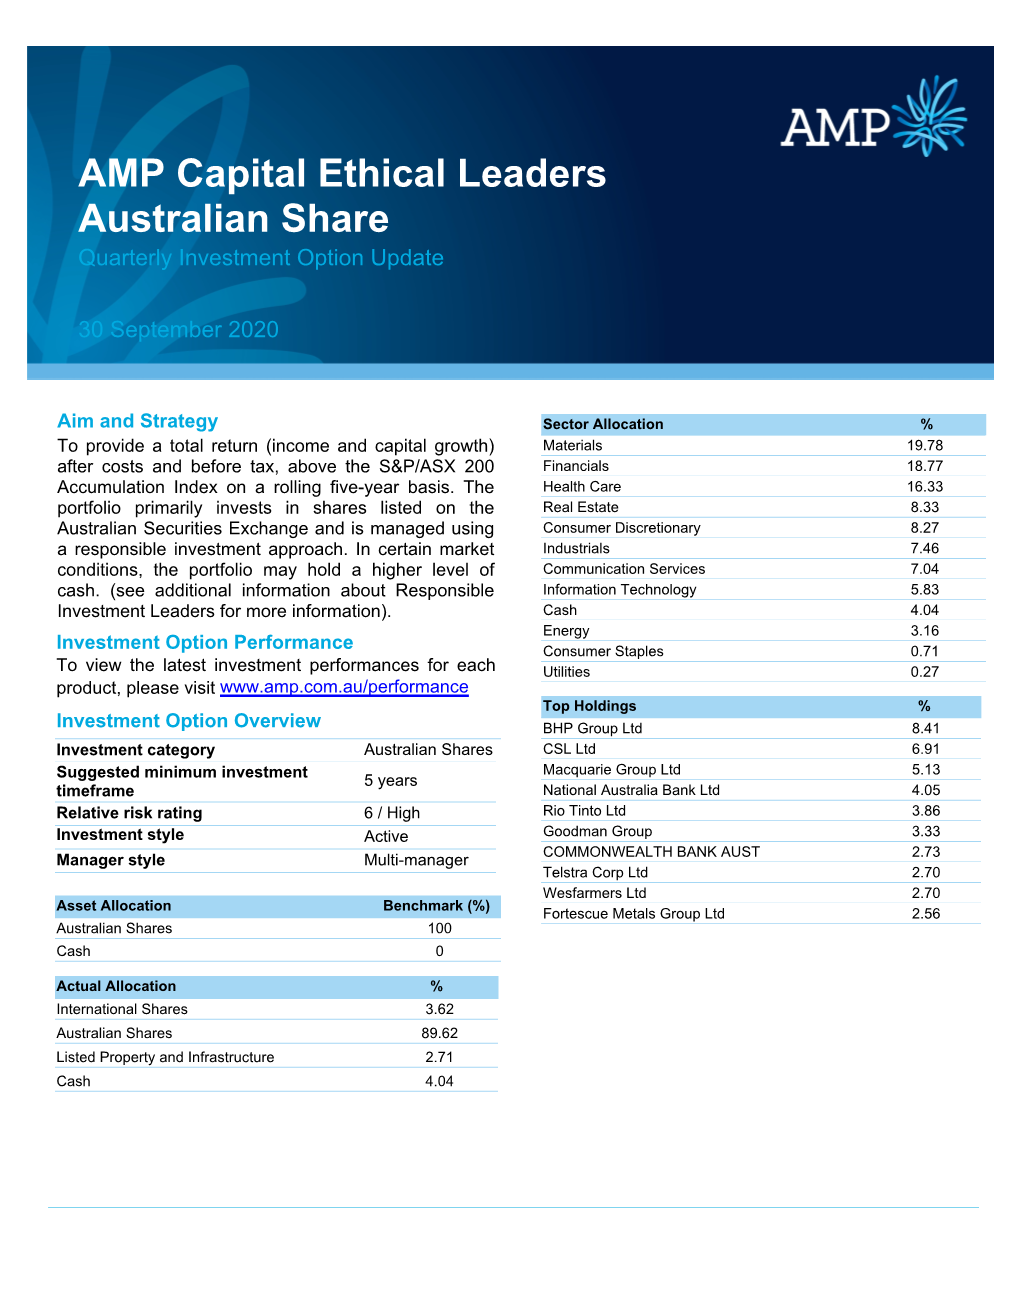 AMP Capital Ethical Leaders Australian Share Quarterly Investment Option Update